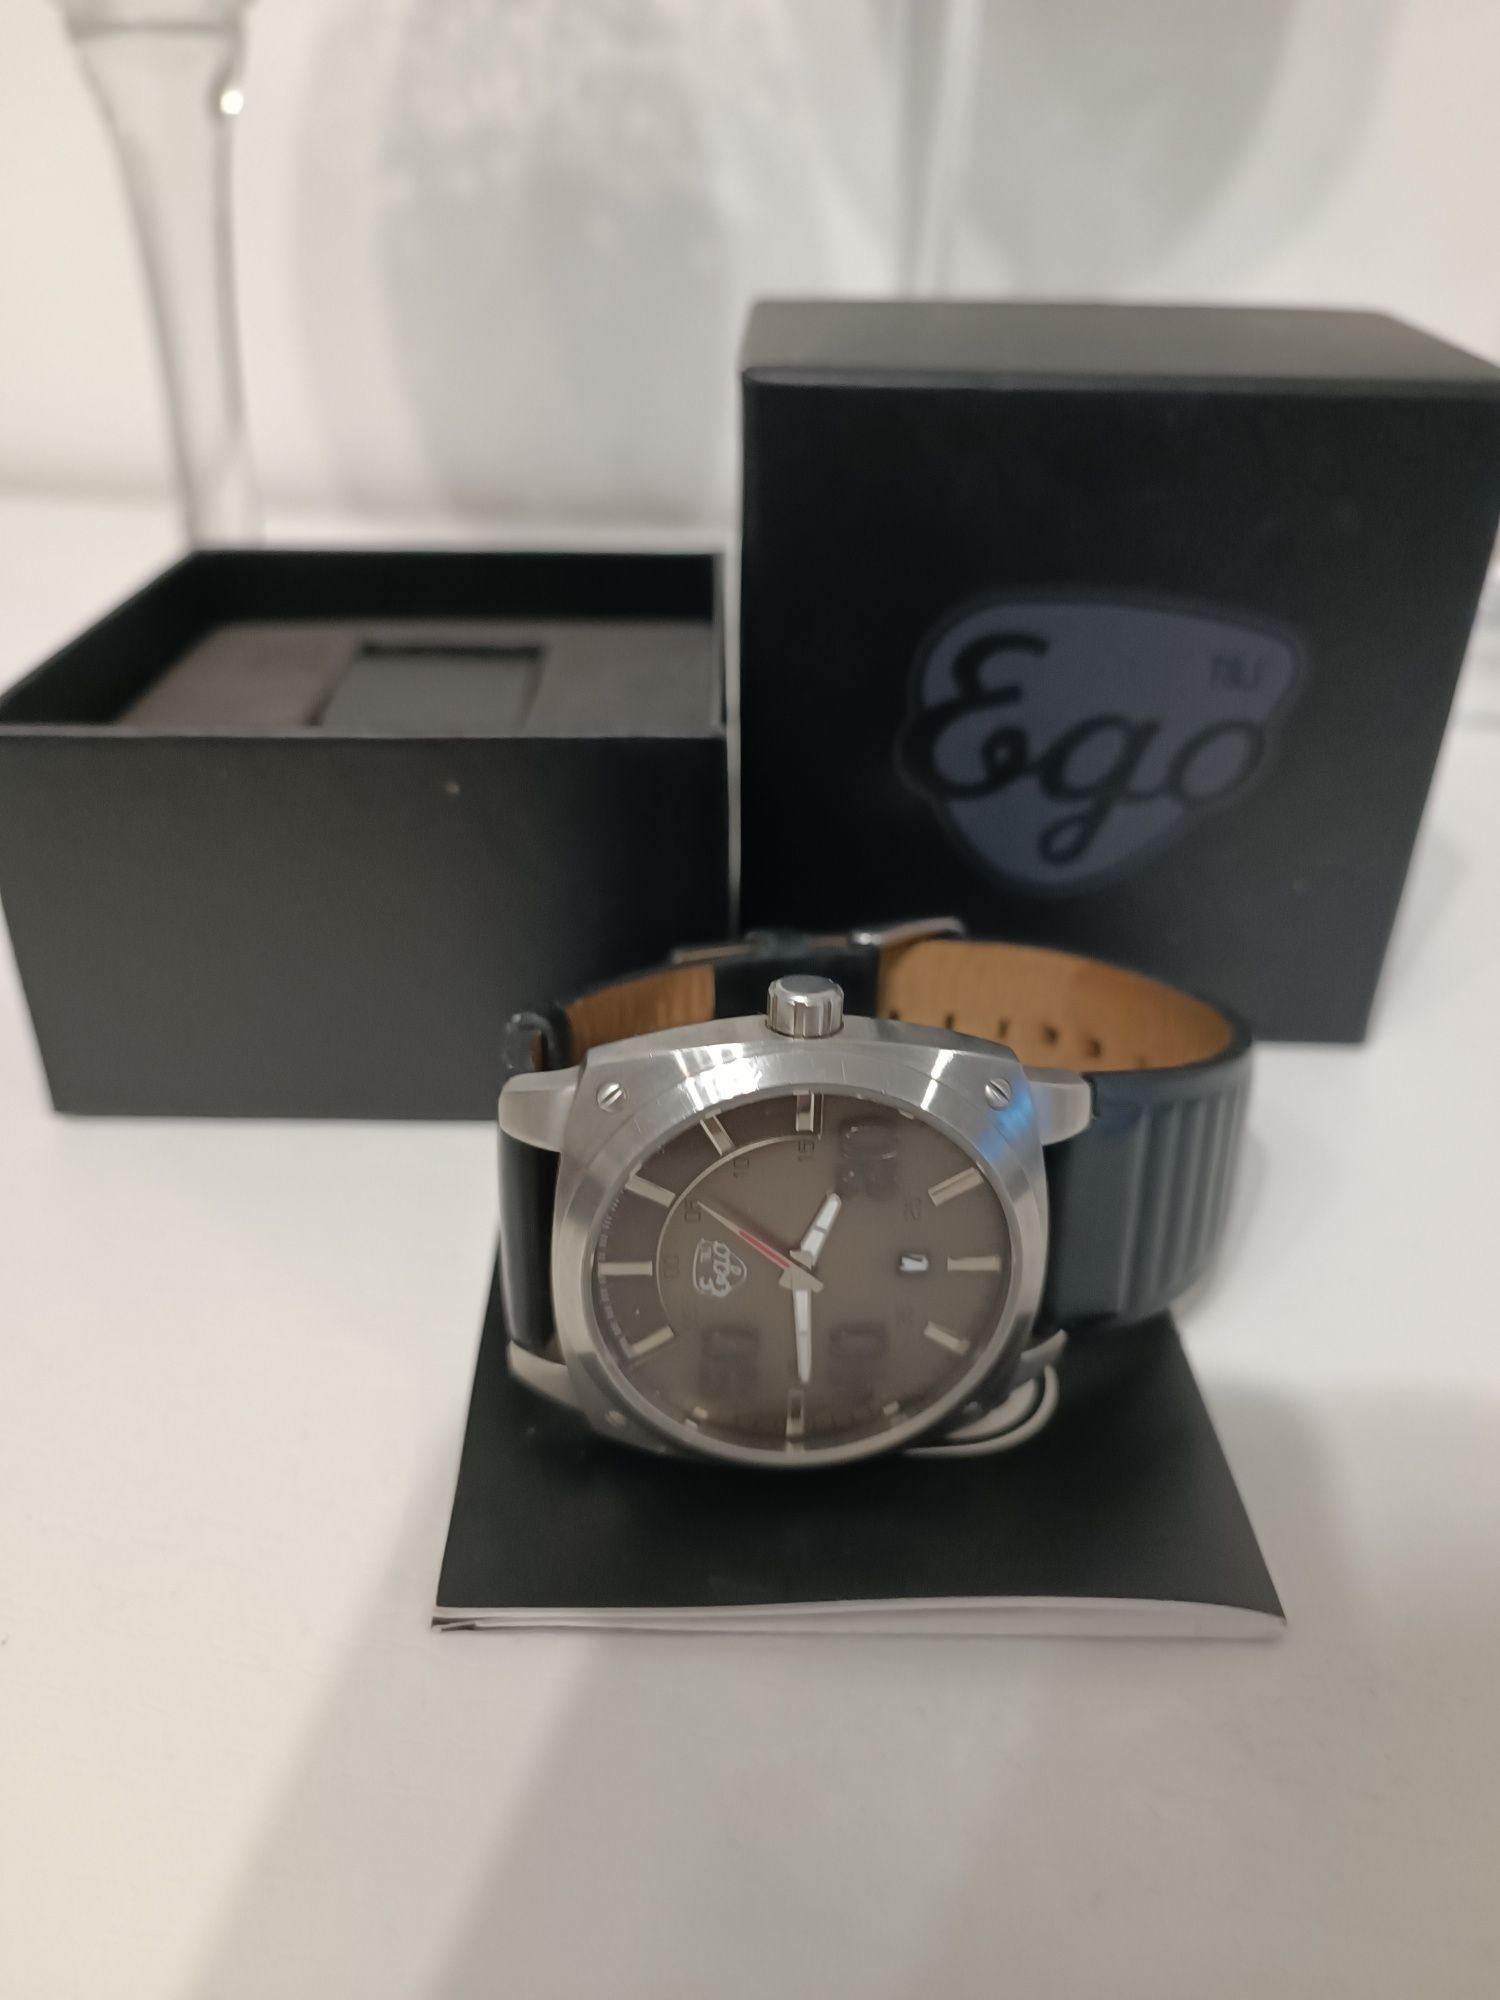 Relógio da marca Ego